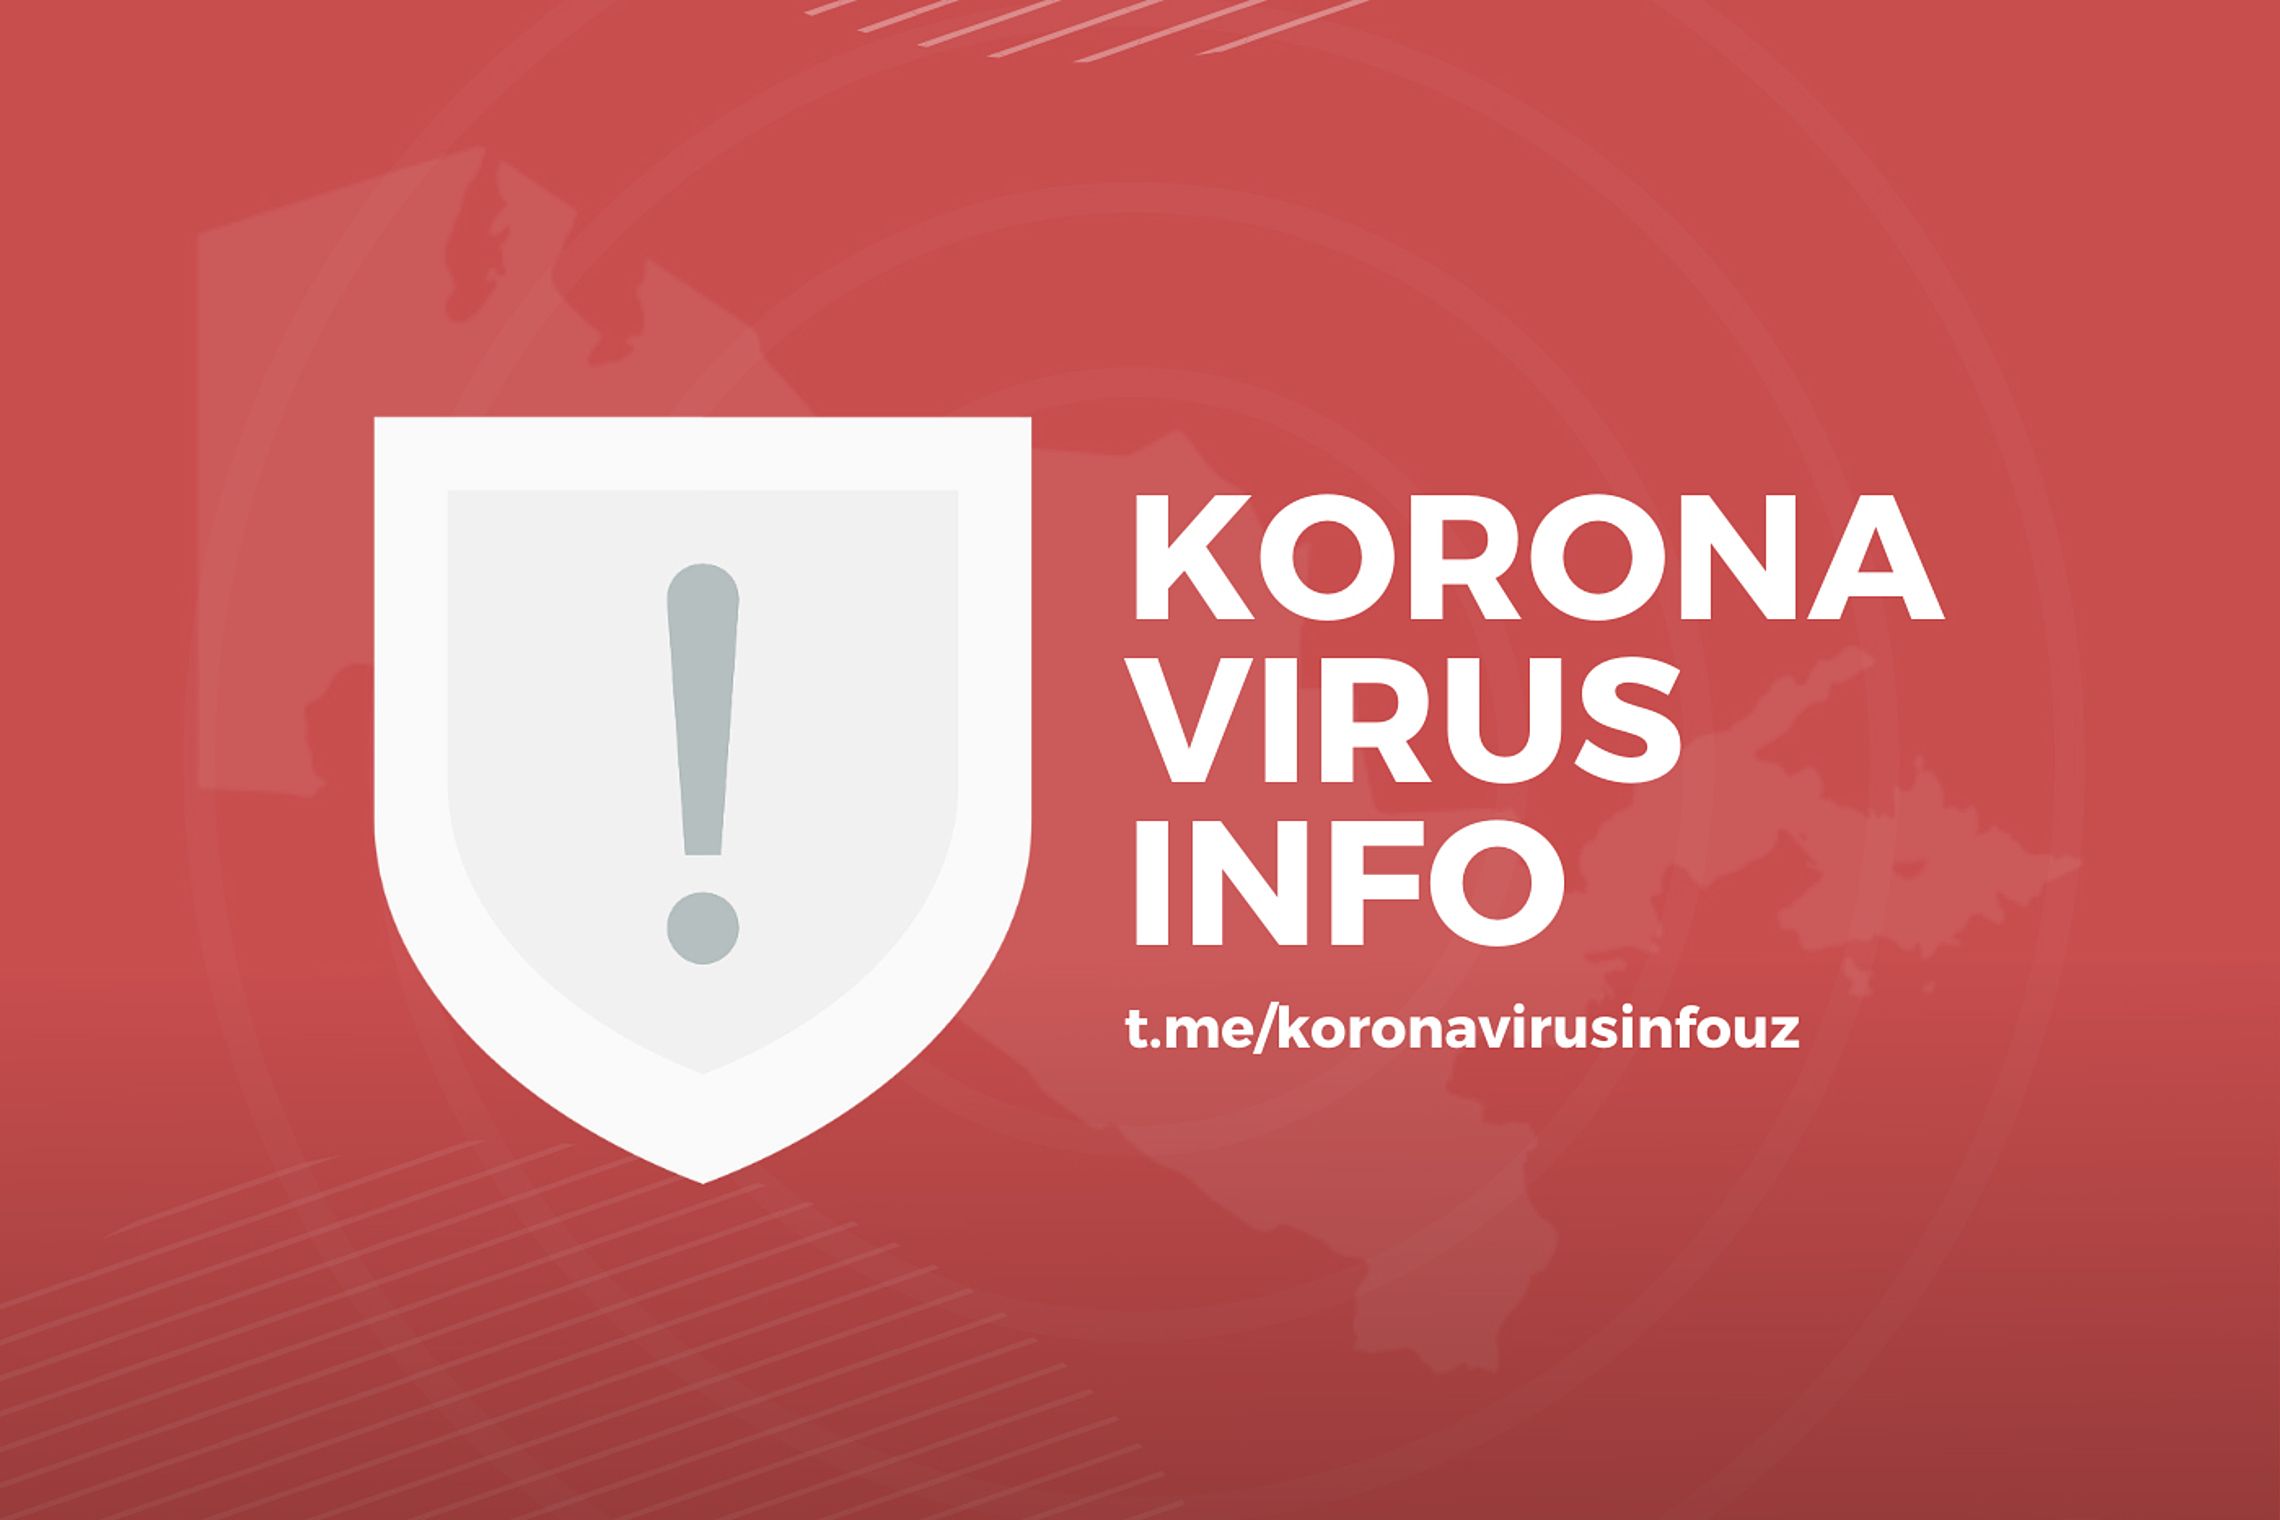 Запущен официальный канал Koronavirus info